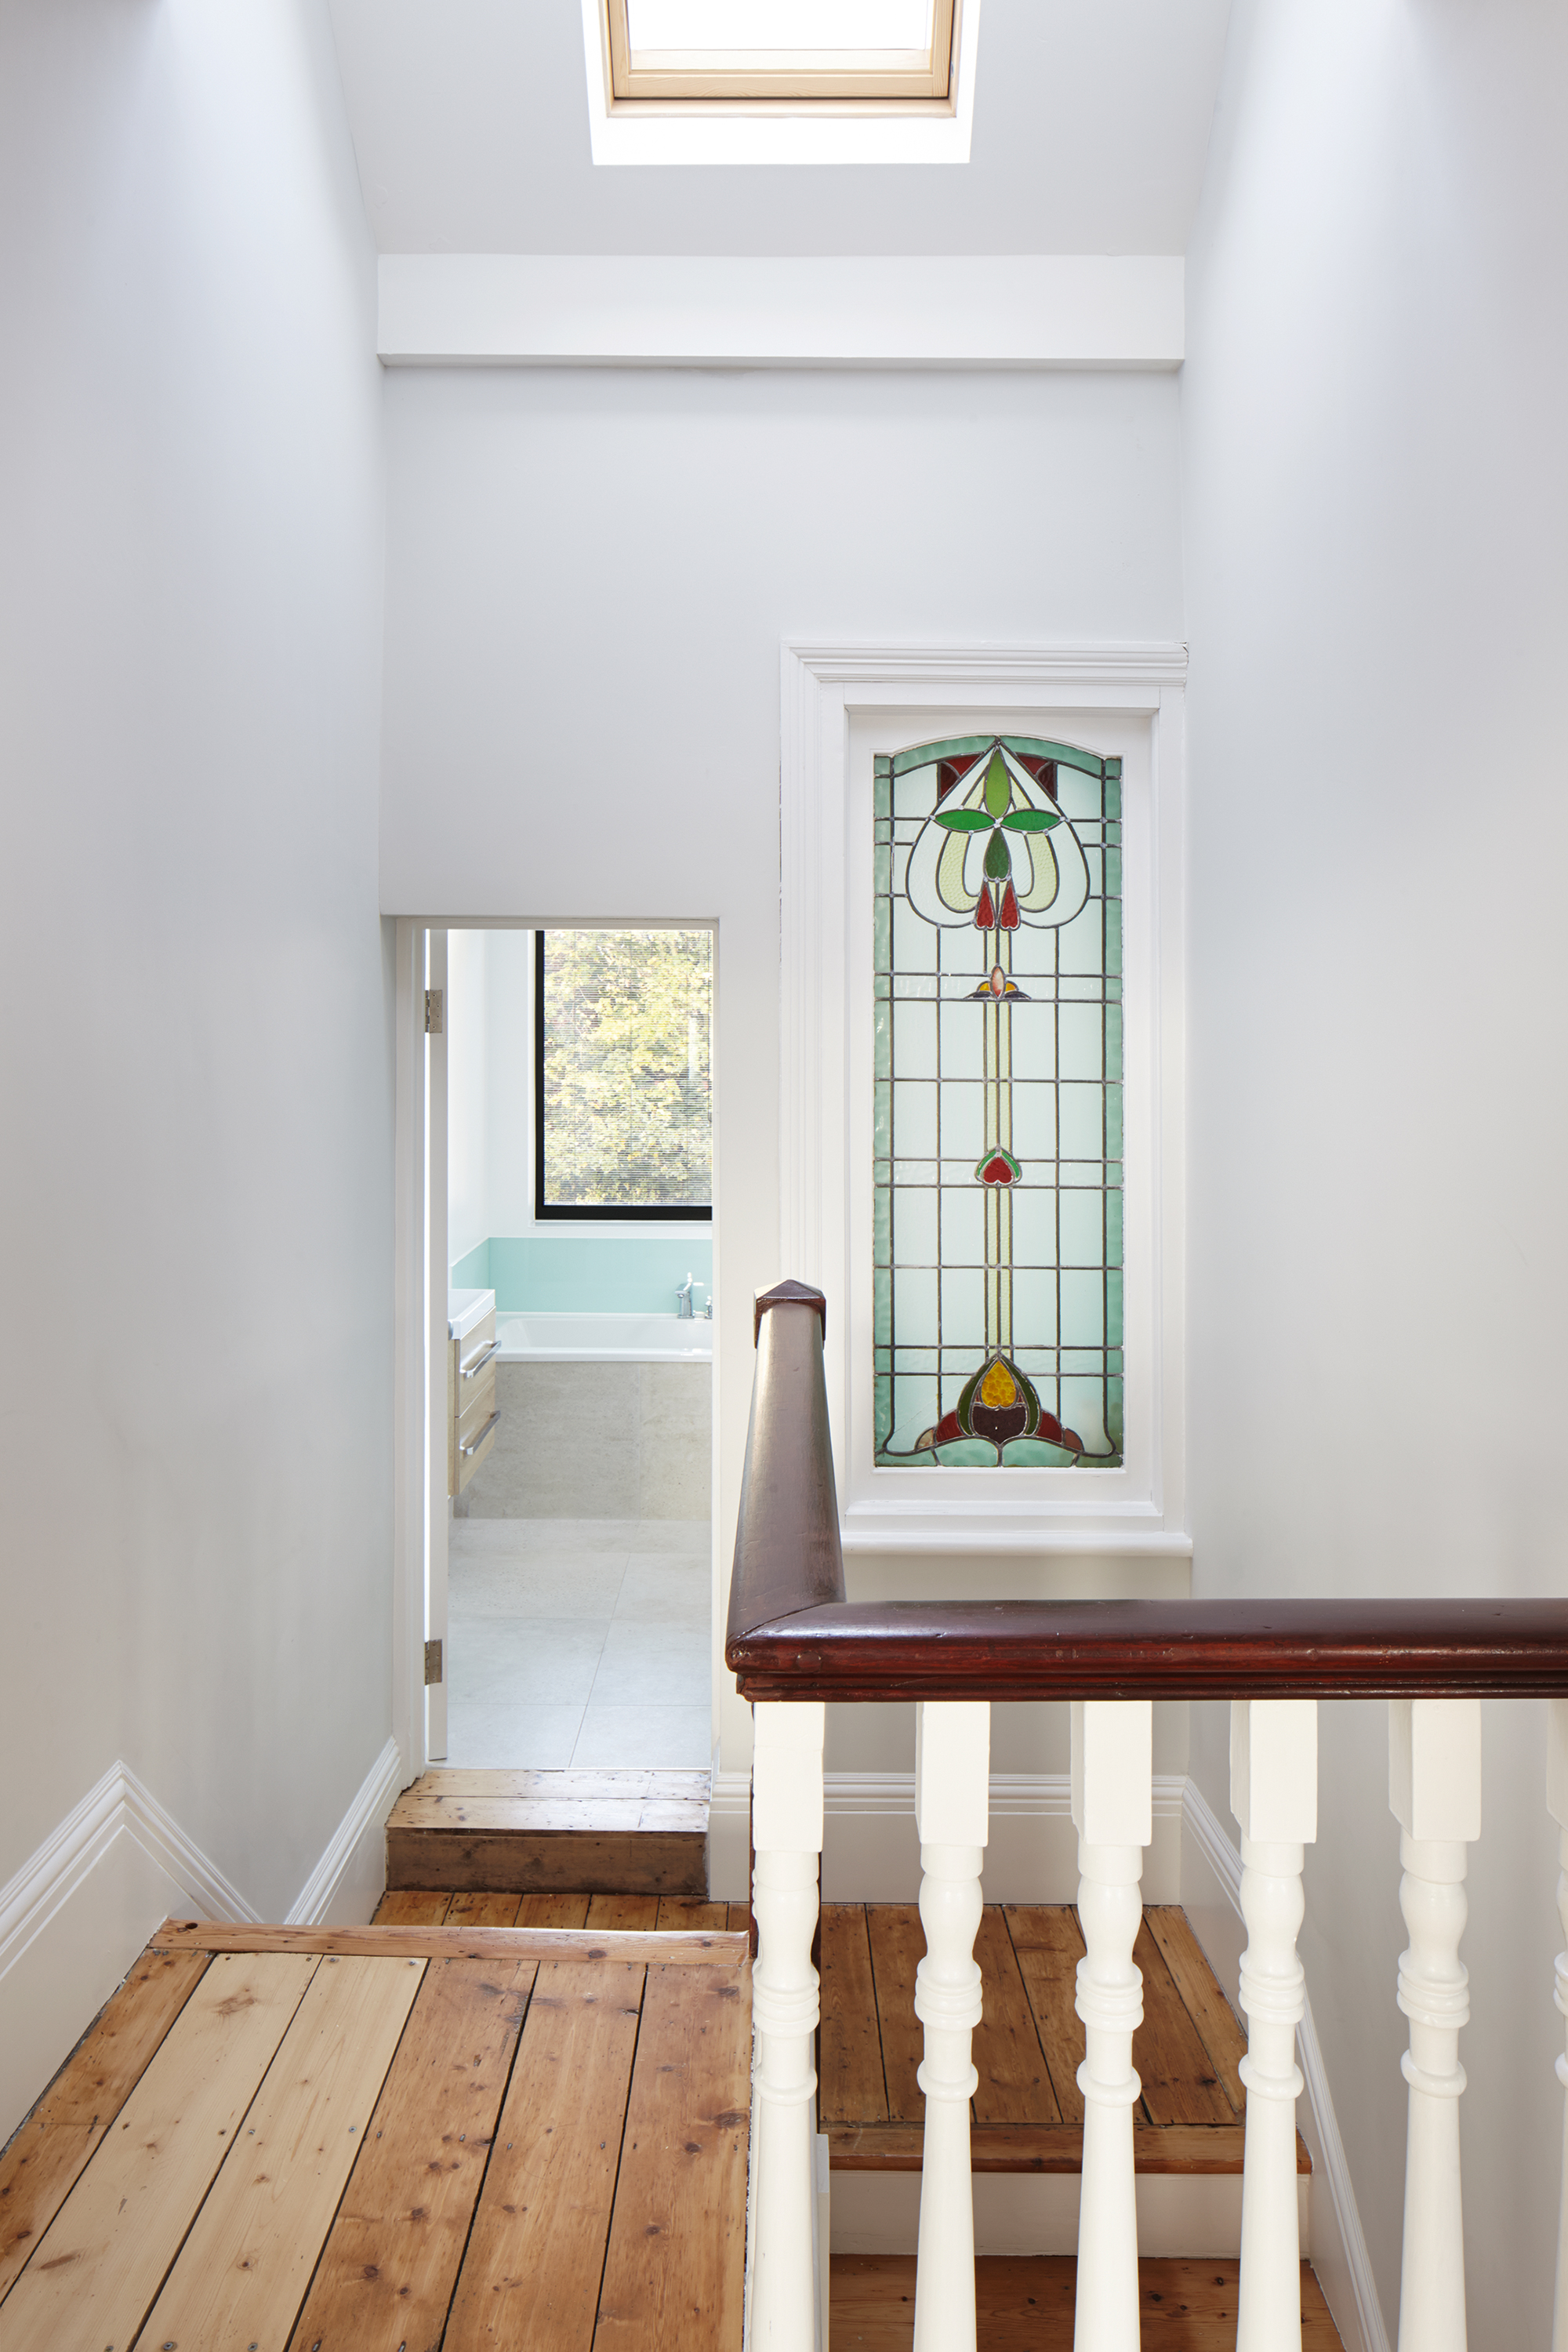 Original stained glass window